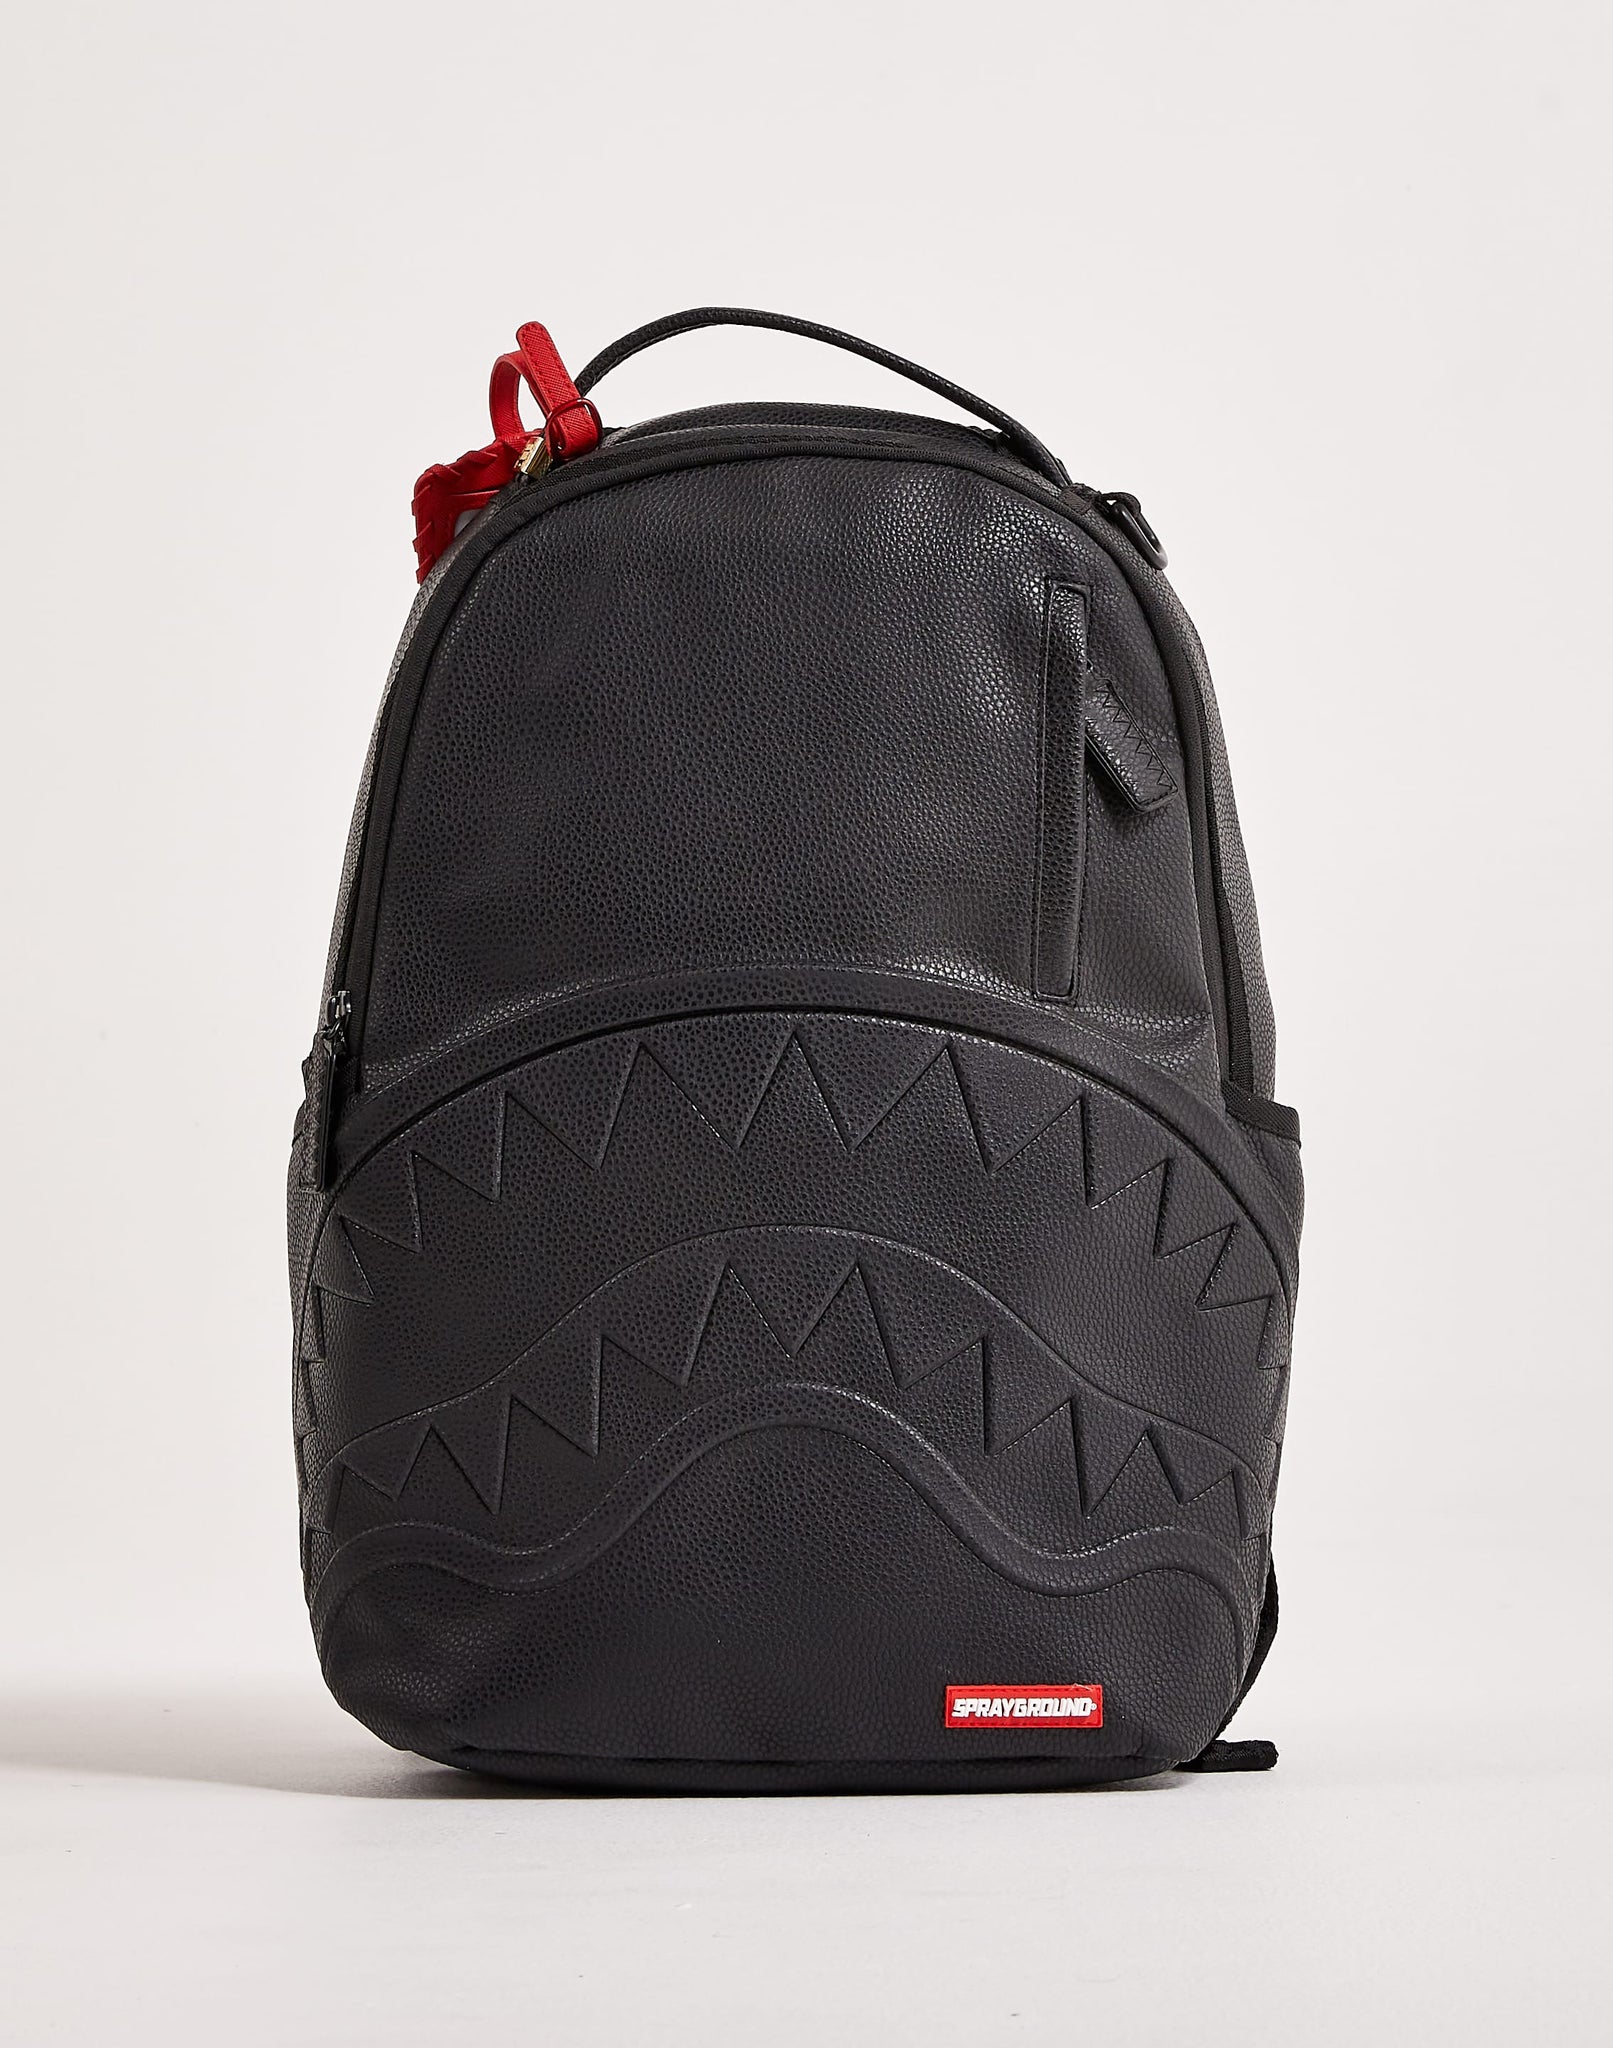 Sprayground Leather Backpacks for Women